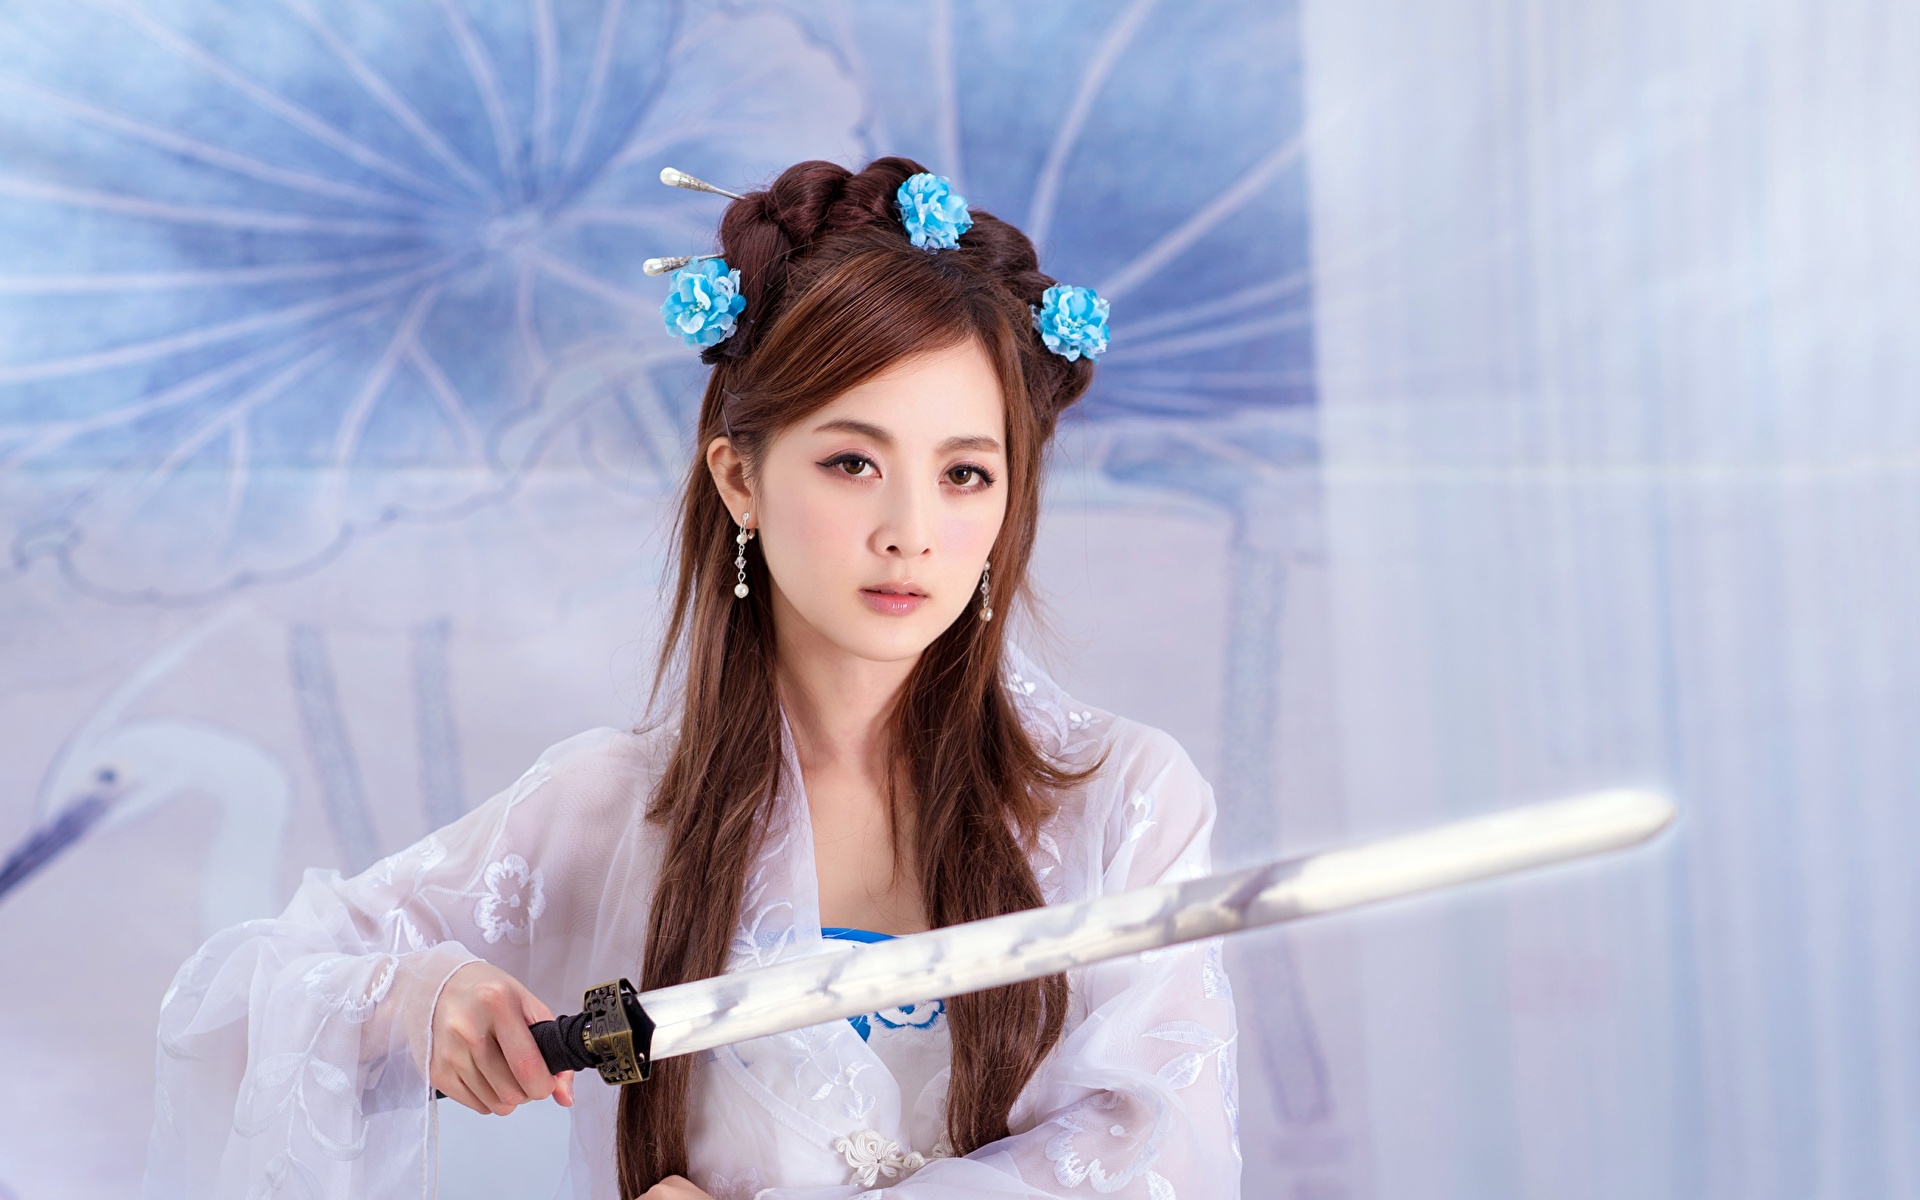 Фото меч Шатенка Mikako Zhang Kaijie, Japanese молодая женщина Азиаты смотрят 1920x1200 Мечи меча с мечом шатенки девушка Девушки молодые женщины азиатки азиатка Взгляд смотрит